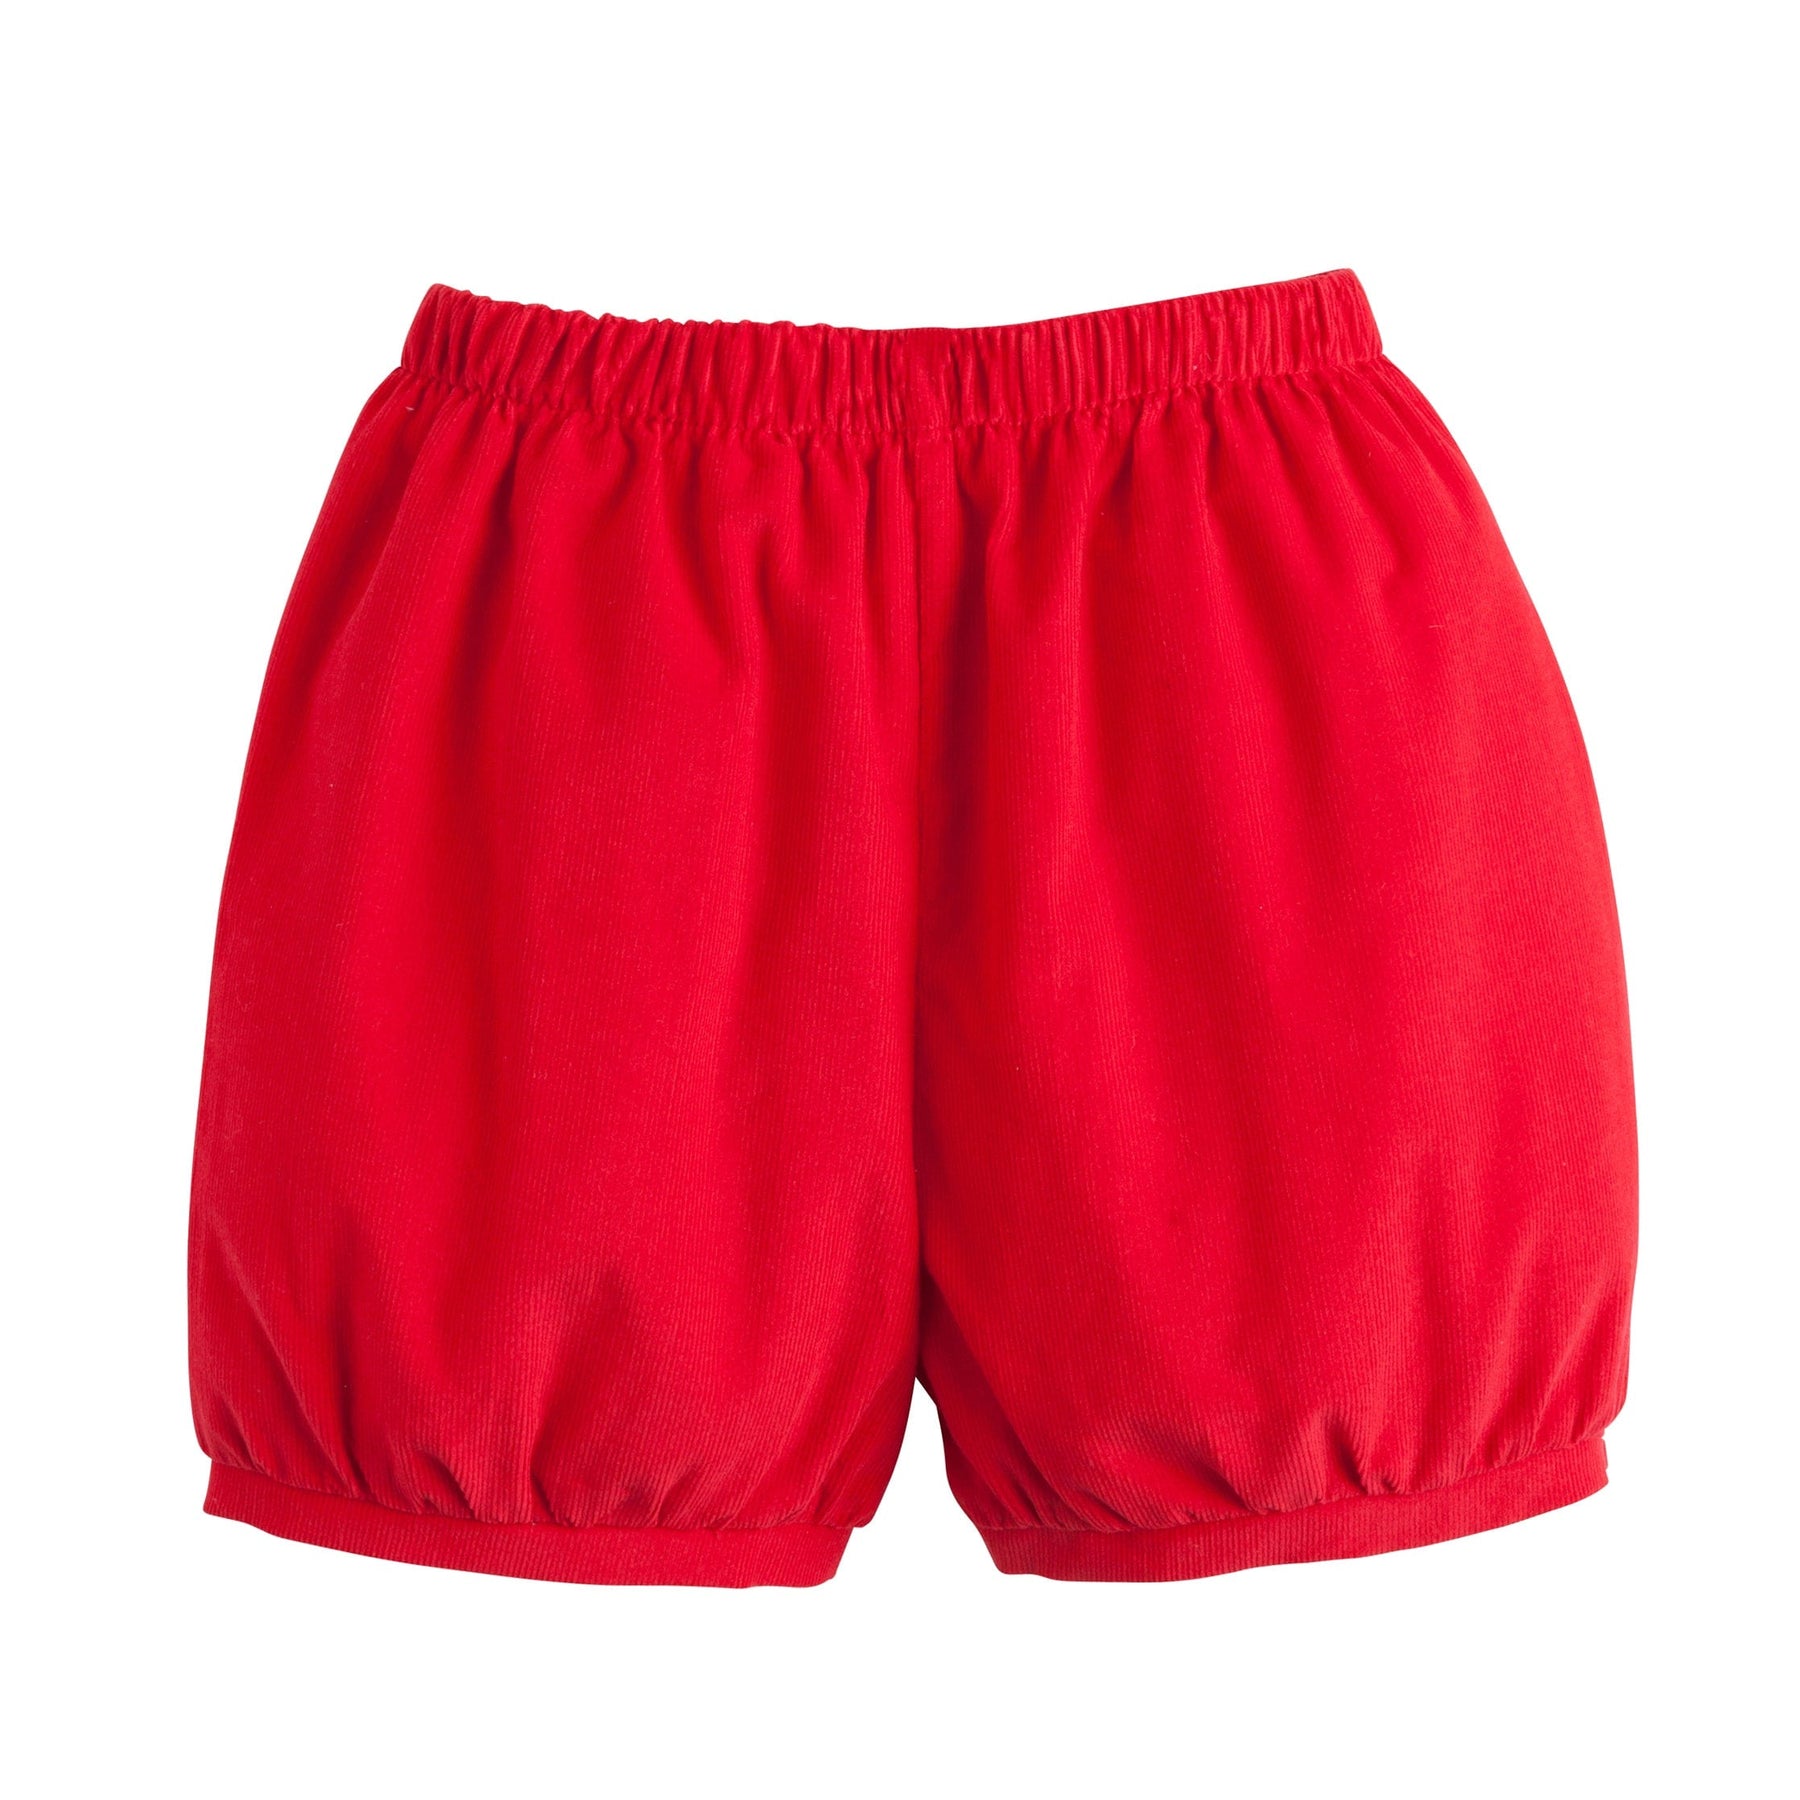 seguridadindustrialcr classic childrens clothing red corduroy elastic waist shorts